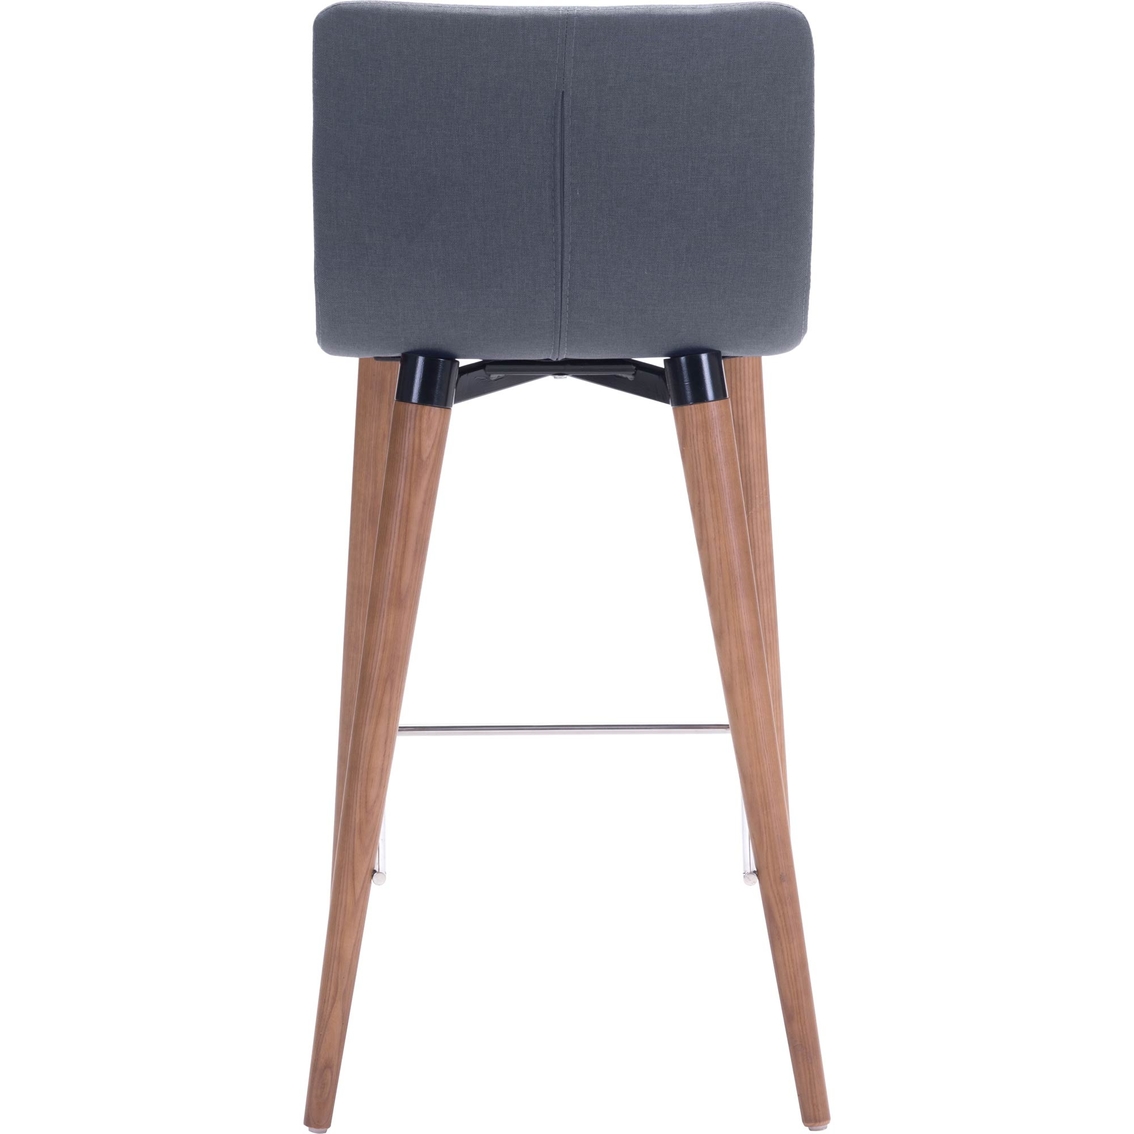 Zuo Modern Jericho Counter Chair 2 Pk. - Image 3 of 4